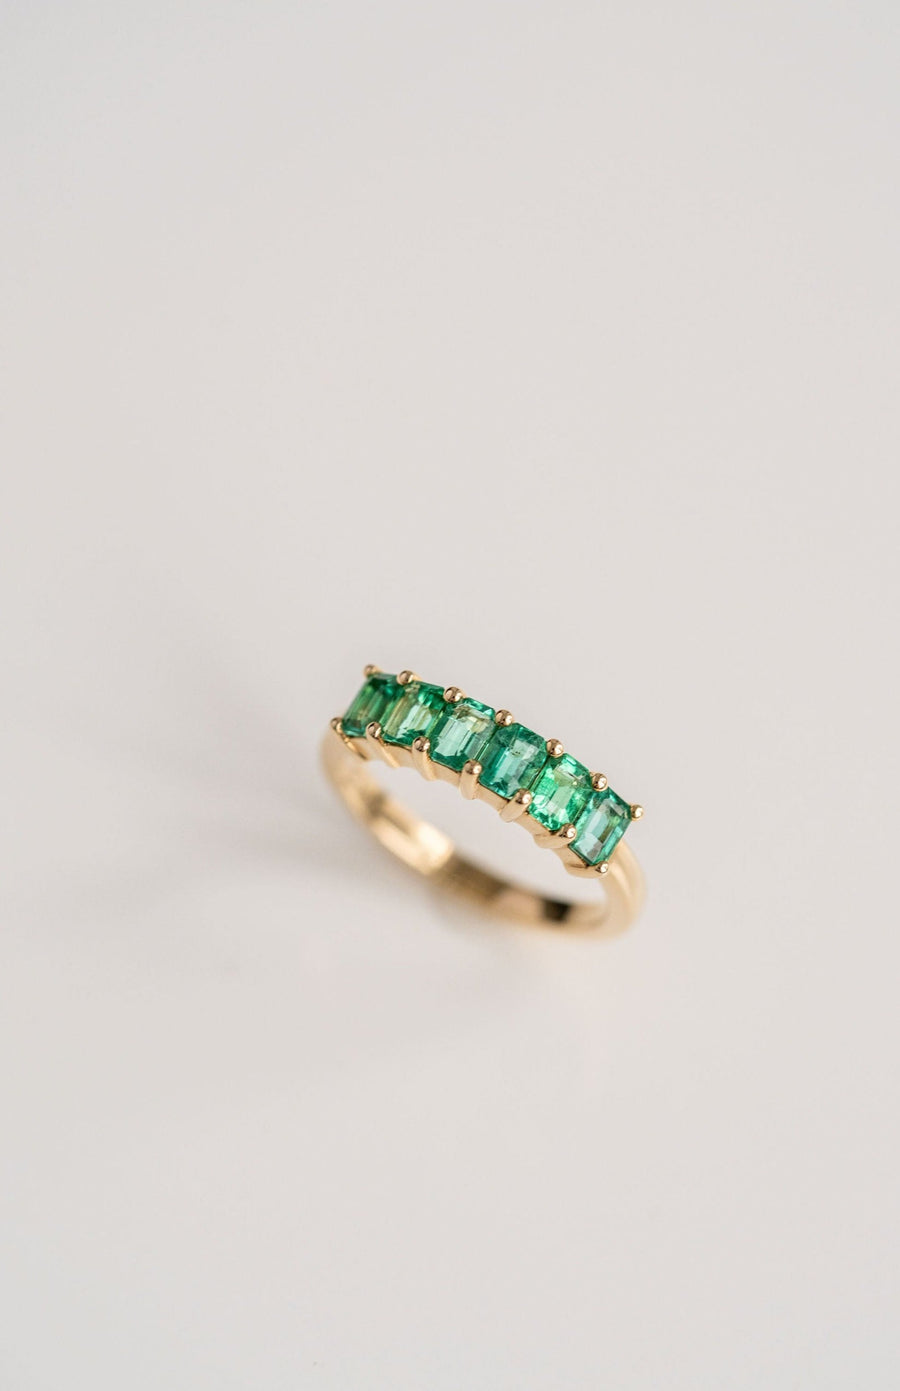 1.60ctw. Emerald Cut Colombian Emerald Gemstone Band, 14k Yellow Gold